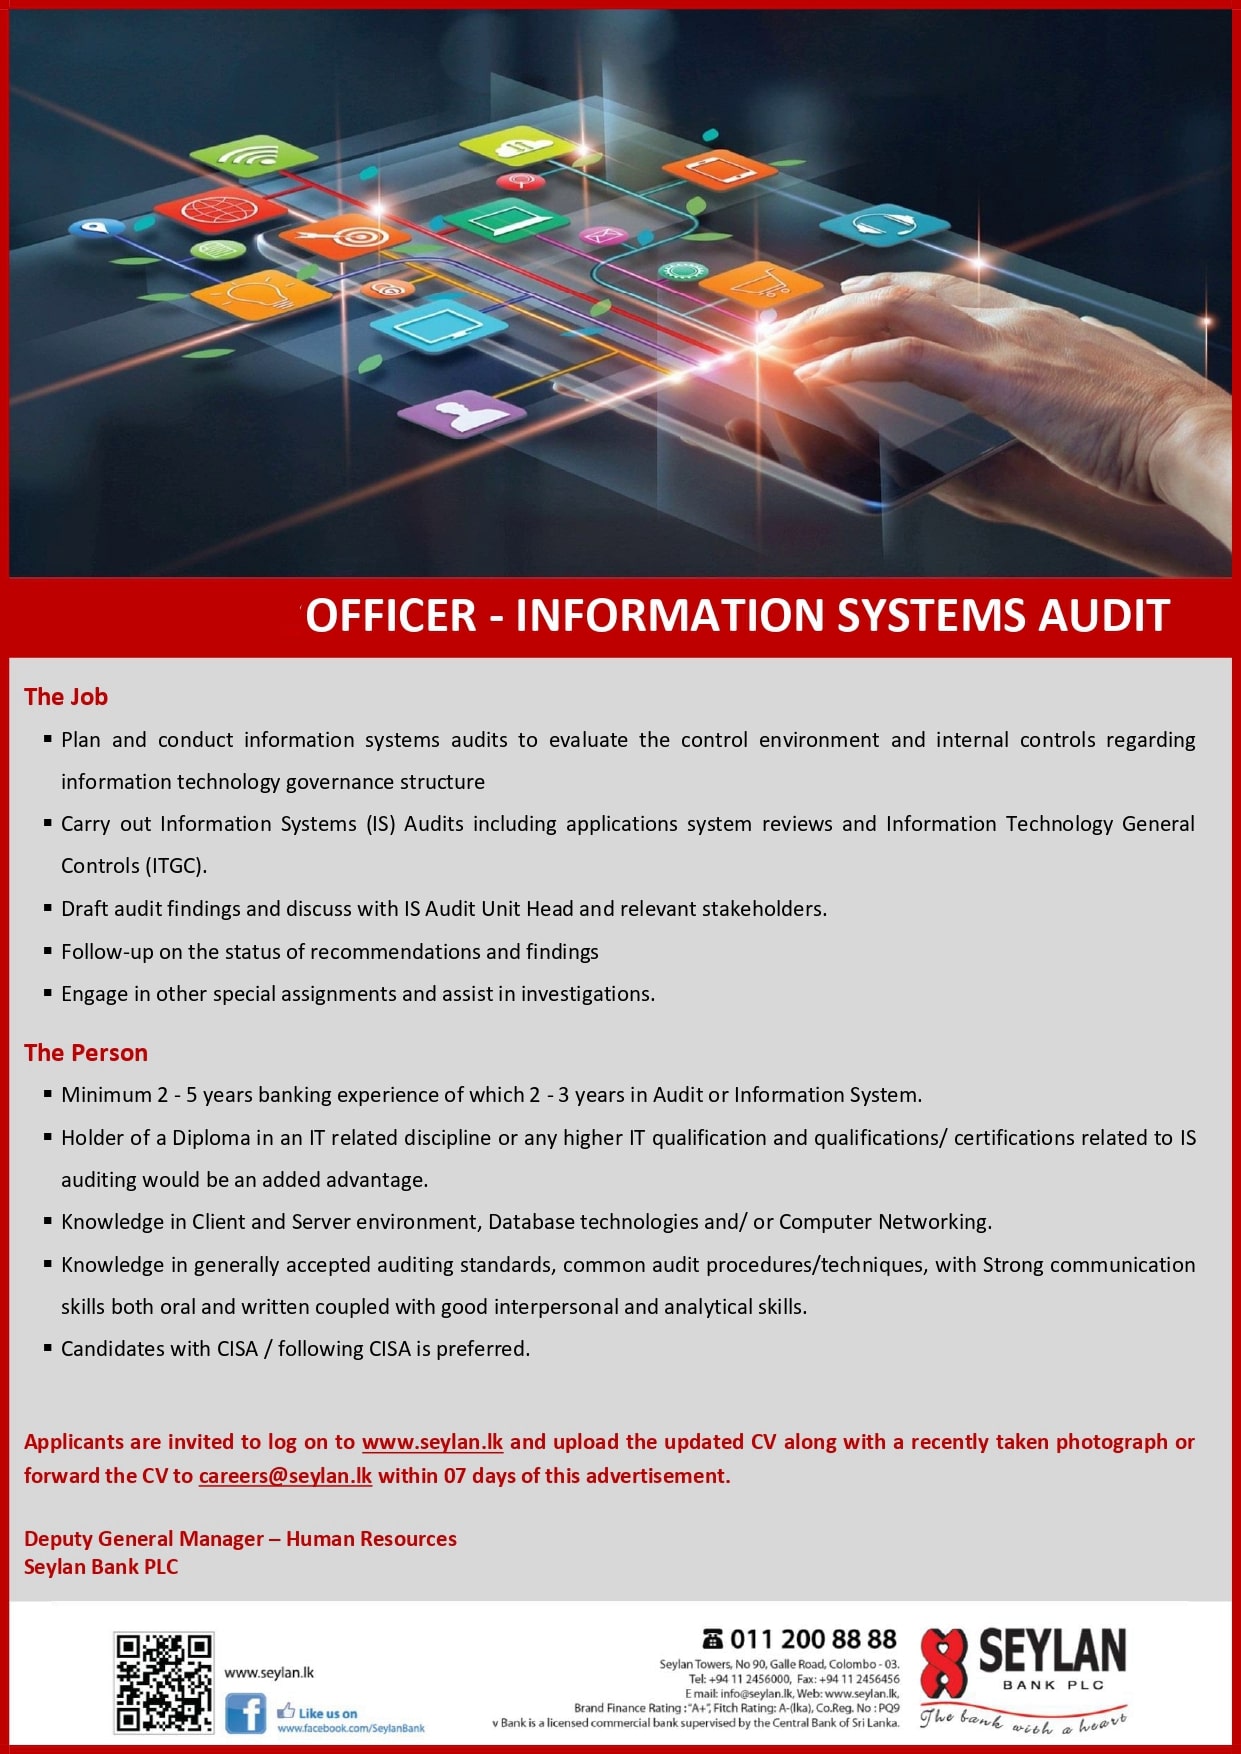 Officer - Information System Audit Job Vacancy - Seylan Bank Jobs Vacancies Details